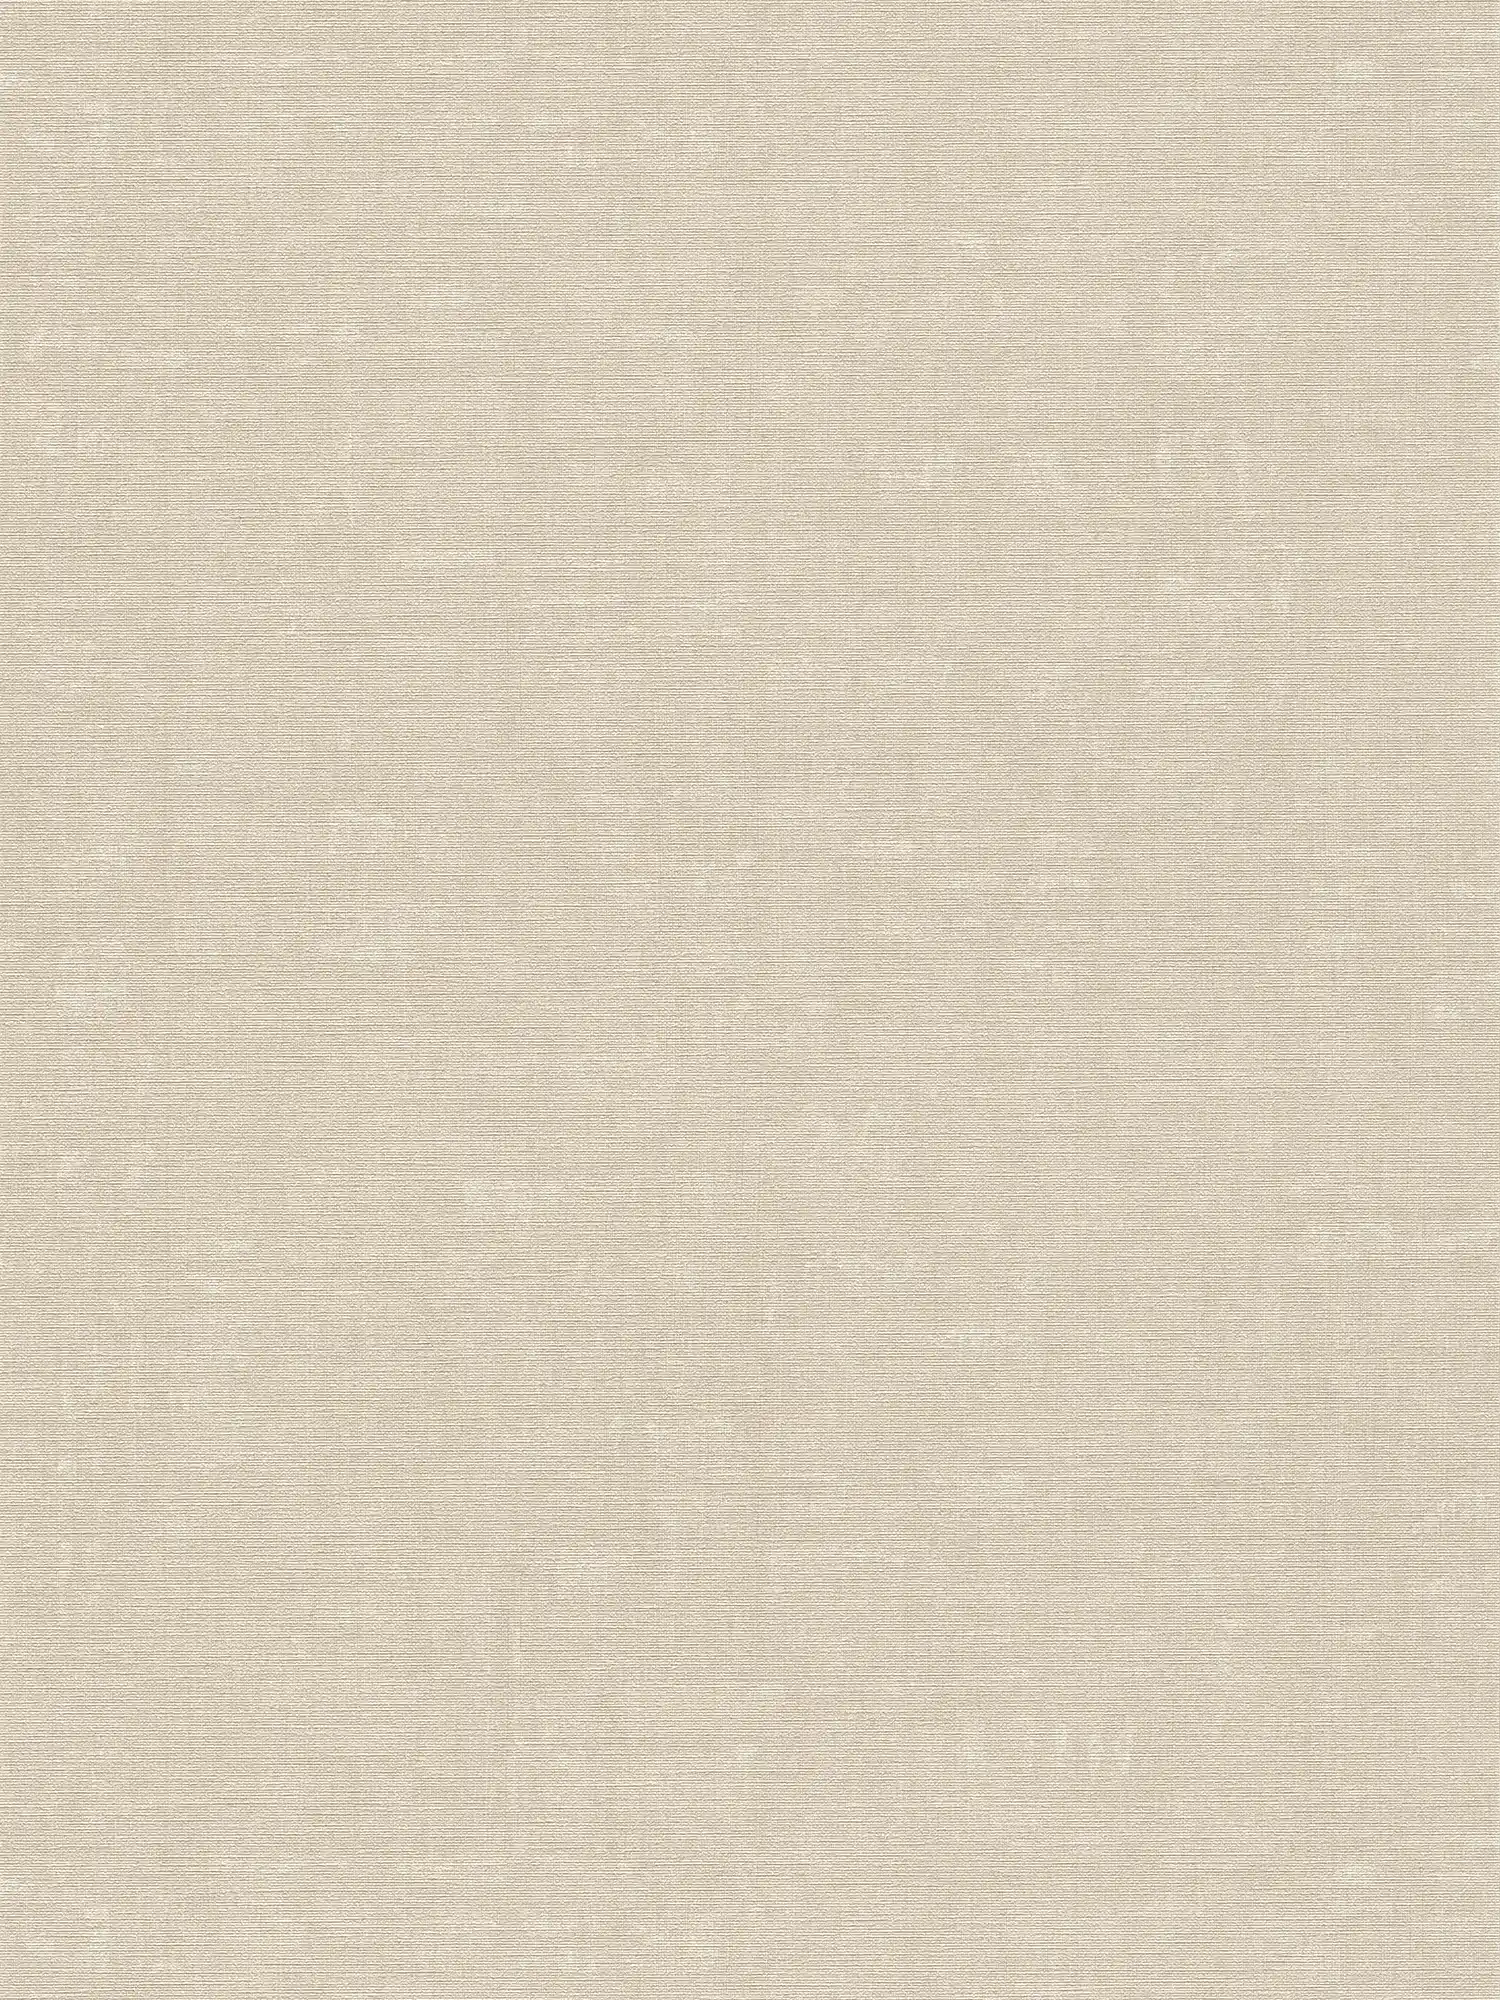 Non-woven wallpaper plain with texture effect - grey, beige
